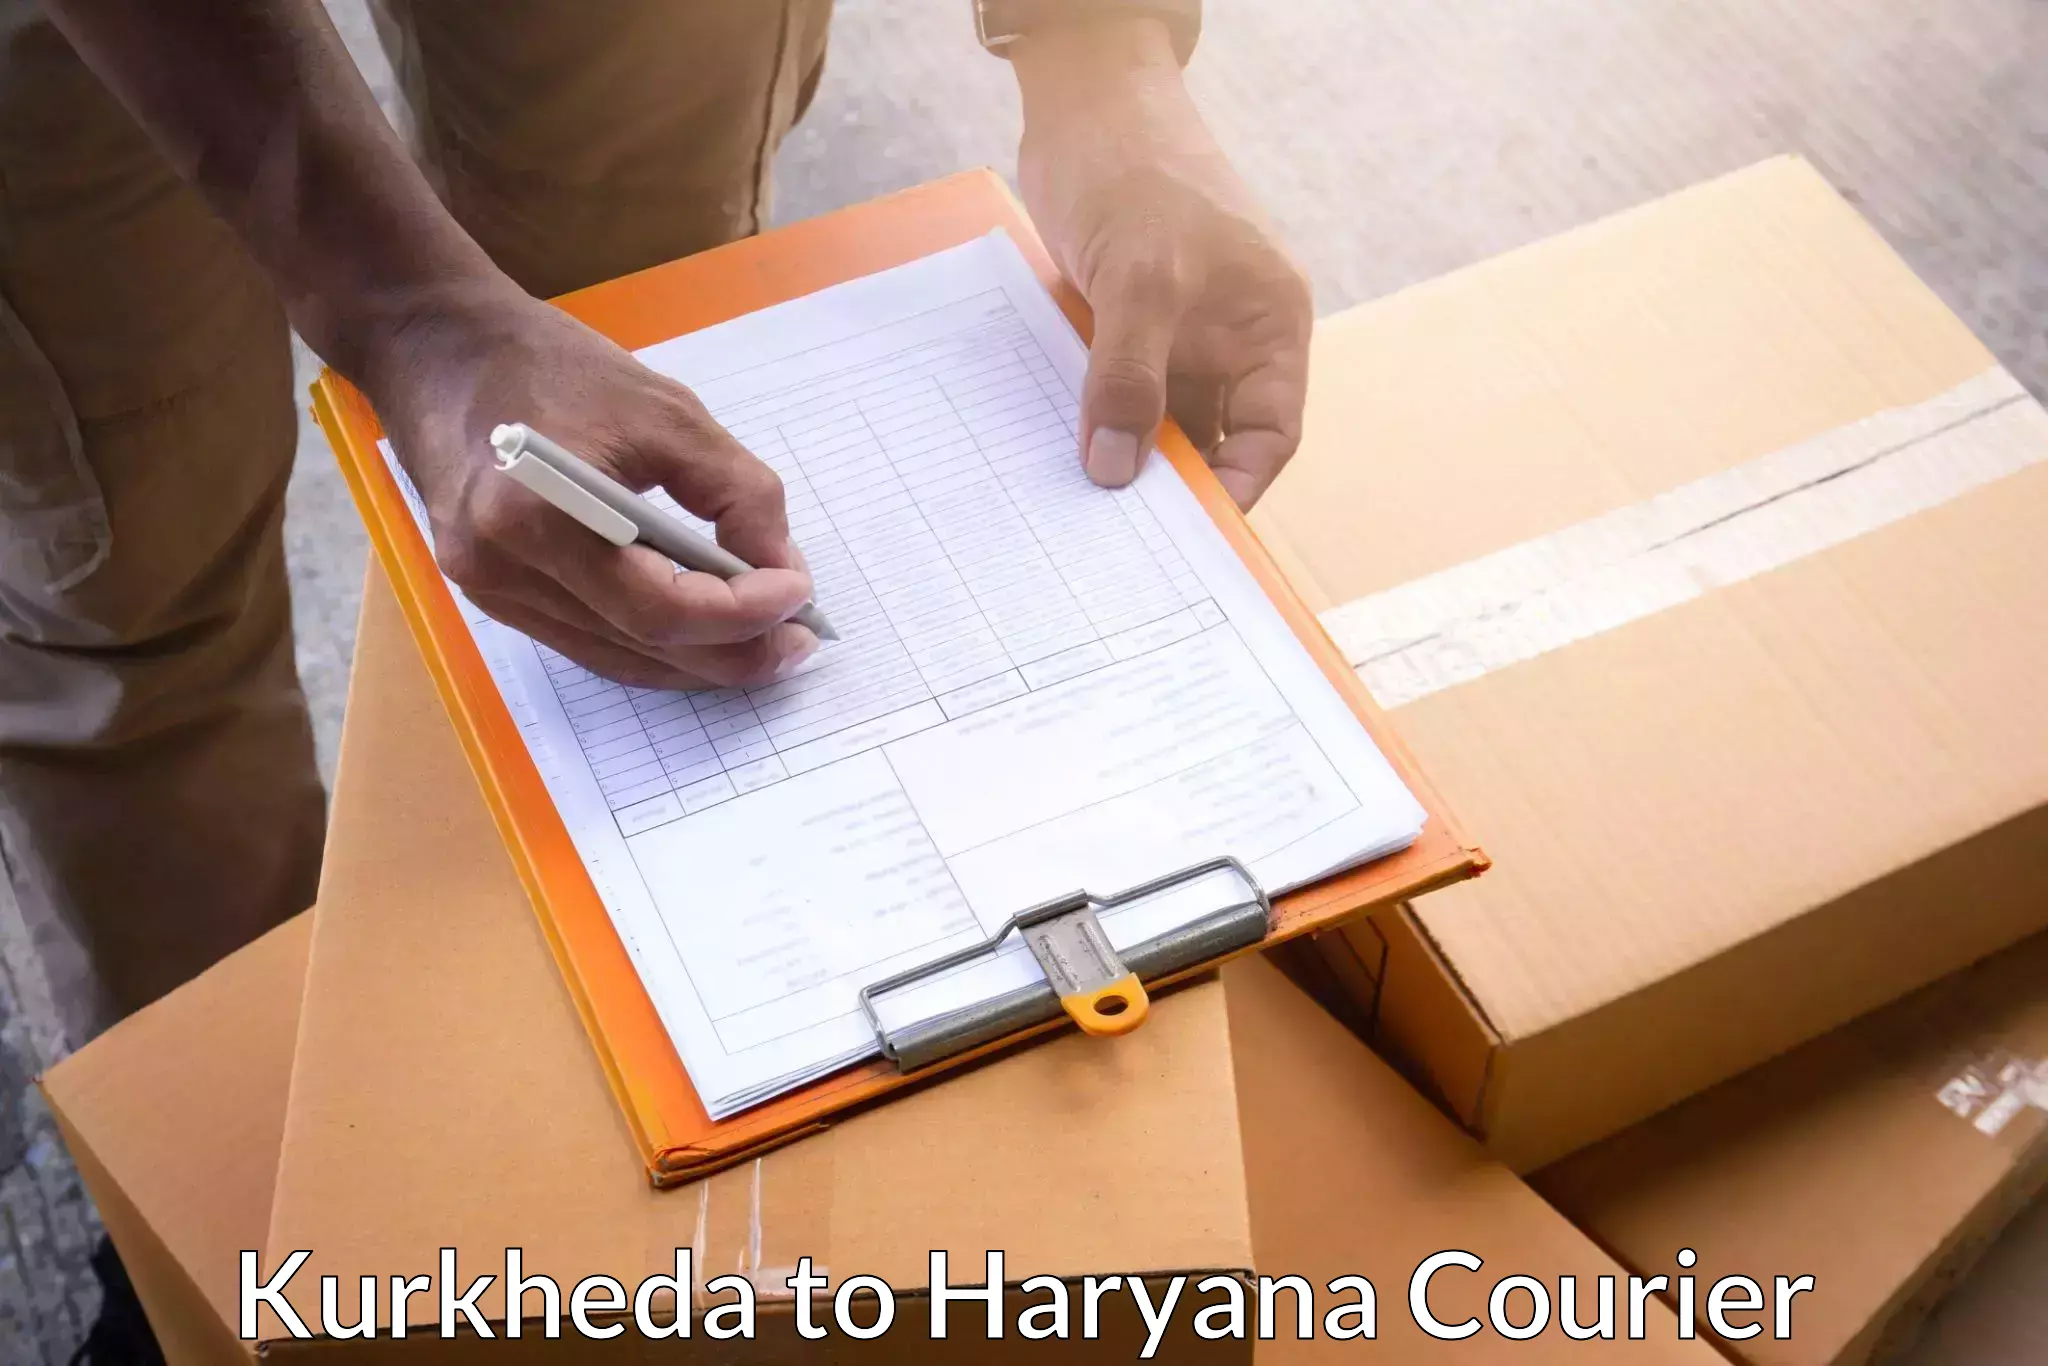 Fast delivery service Kurkheda to Chirya